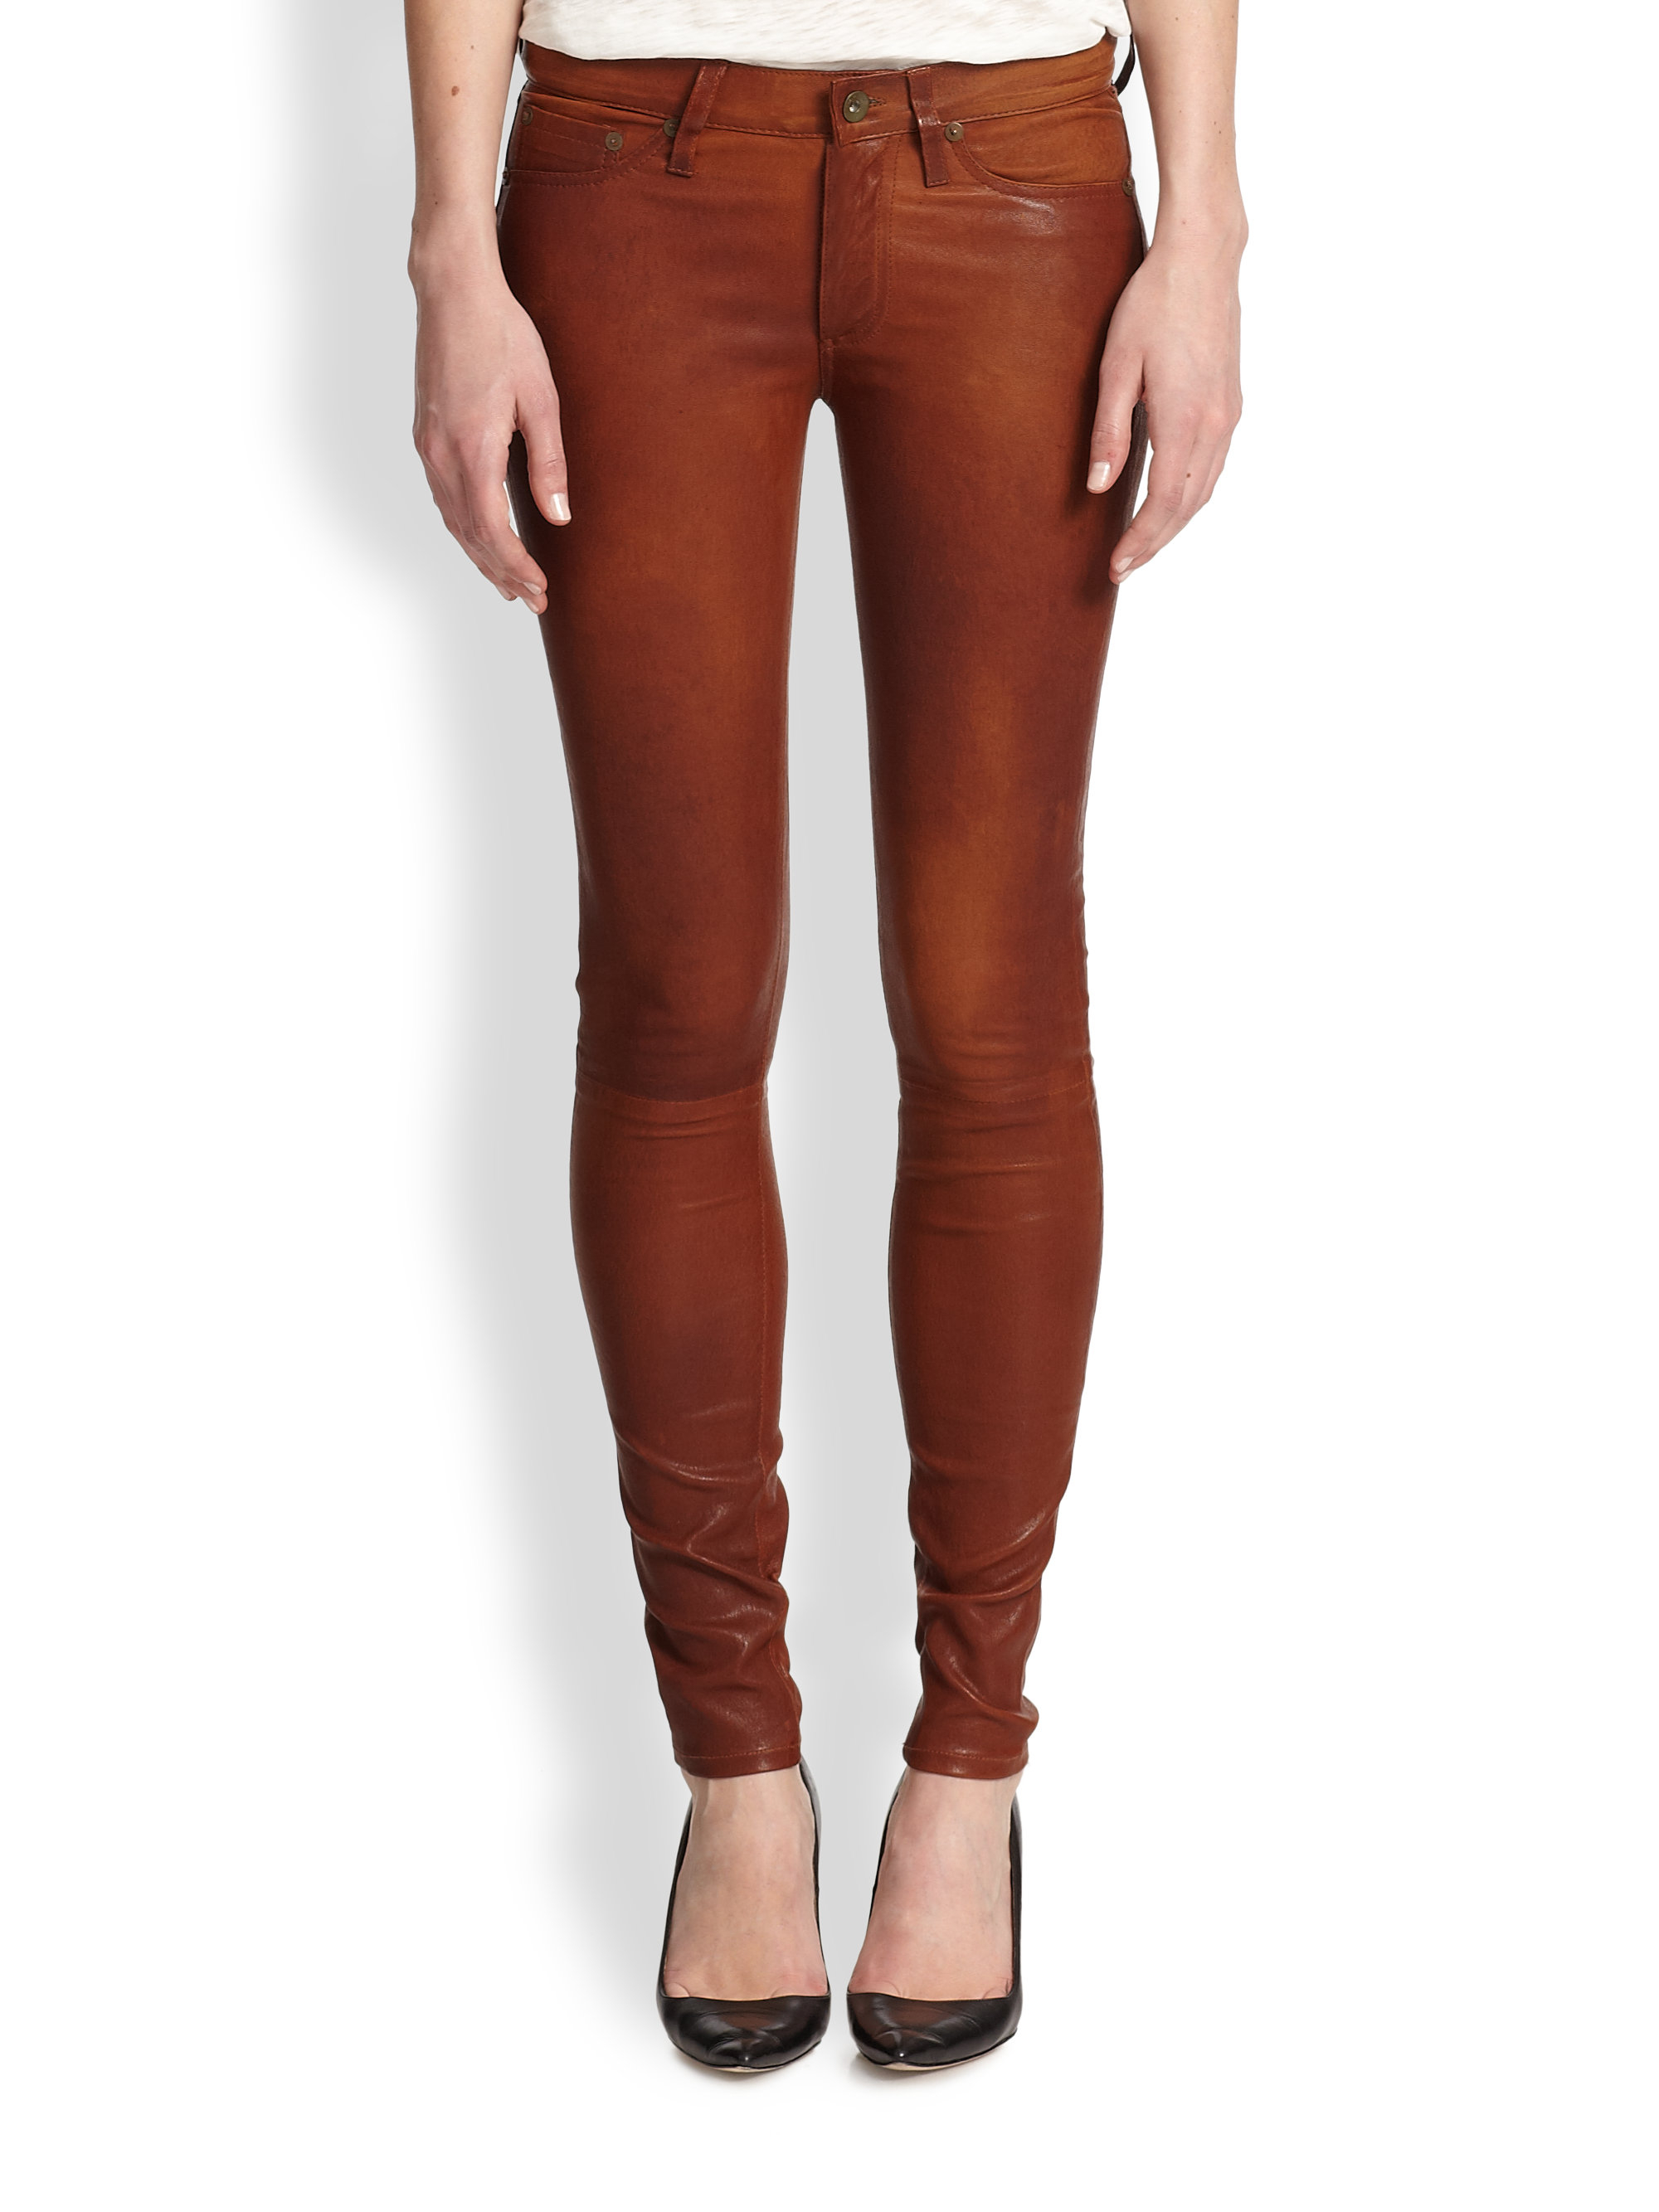 Lyst - Rag & Bone Leather Skinny Jeans in Brown